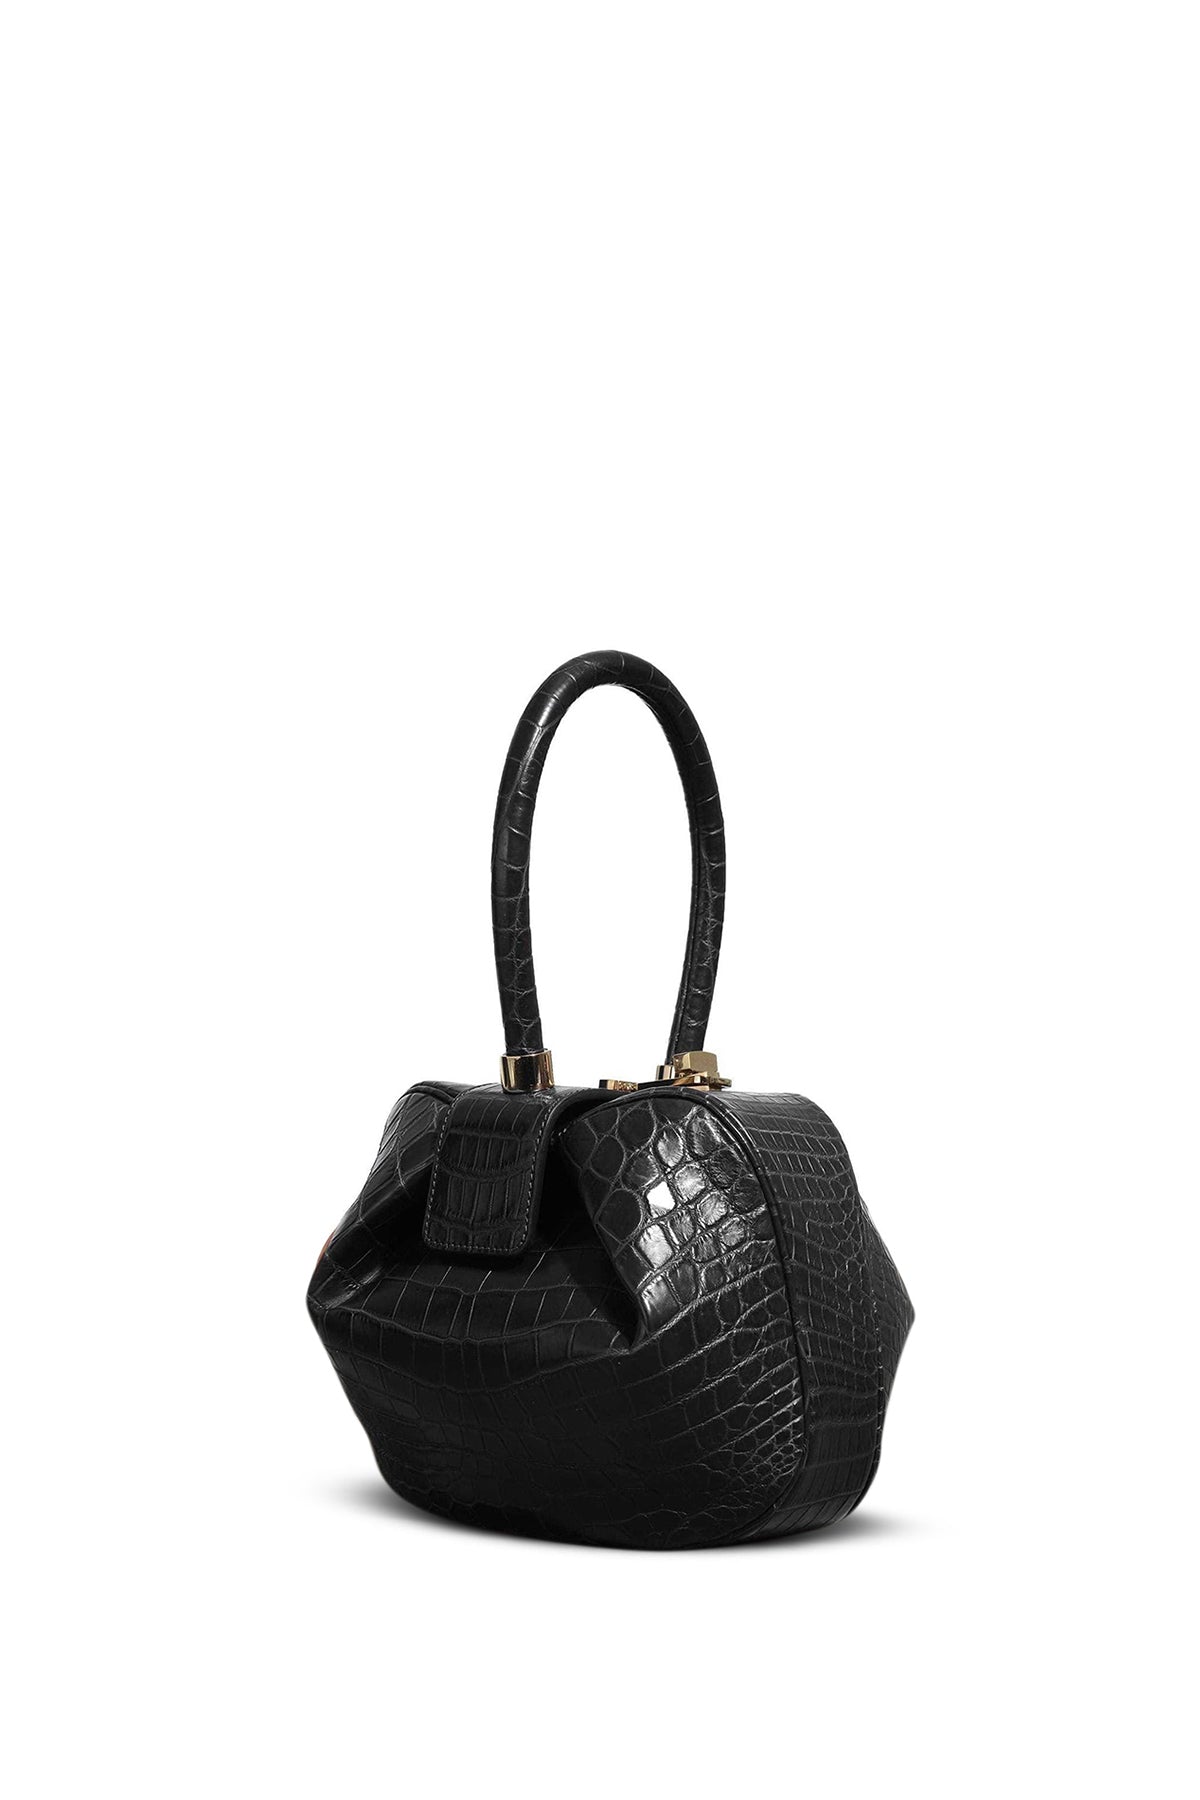 Demi Bag in Black Crocodile Leather